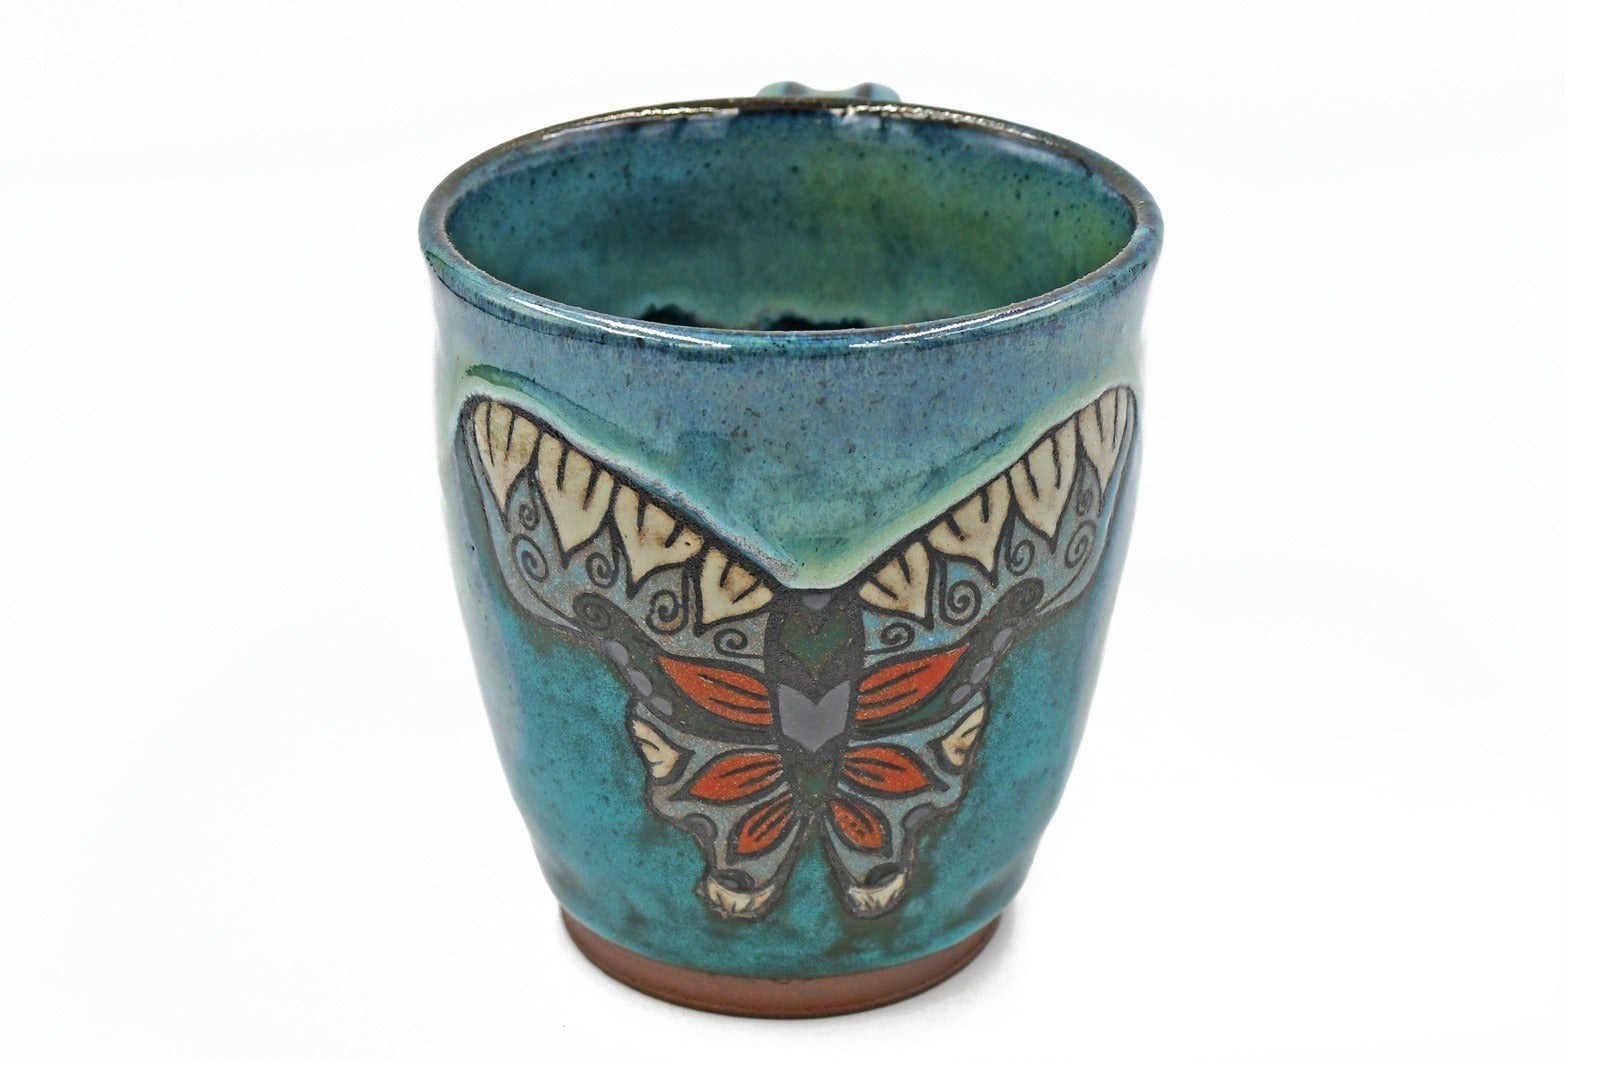 Butterfly Ceramic Pottery Mug - Turquoise, Green, Stylized